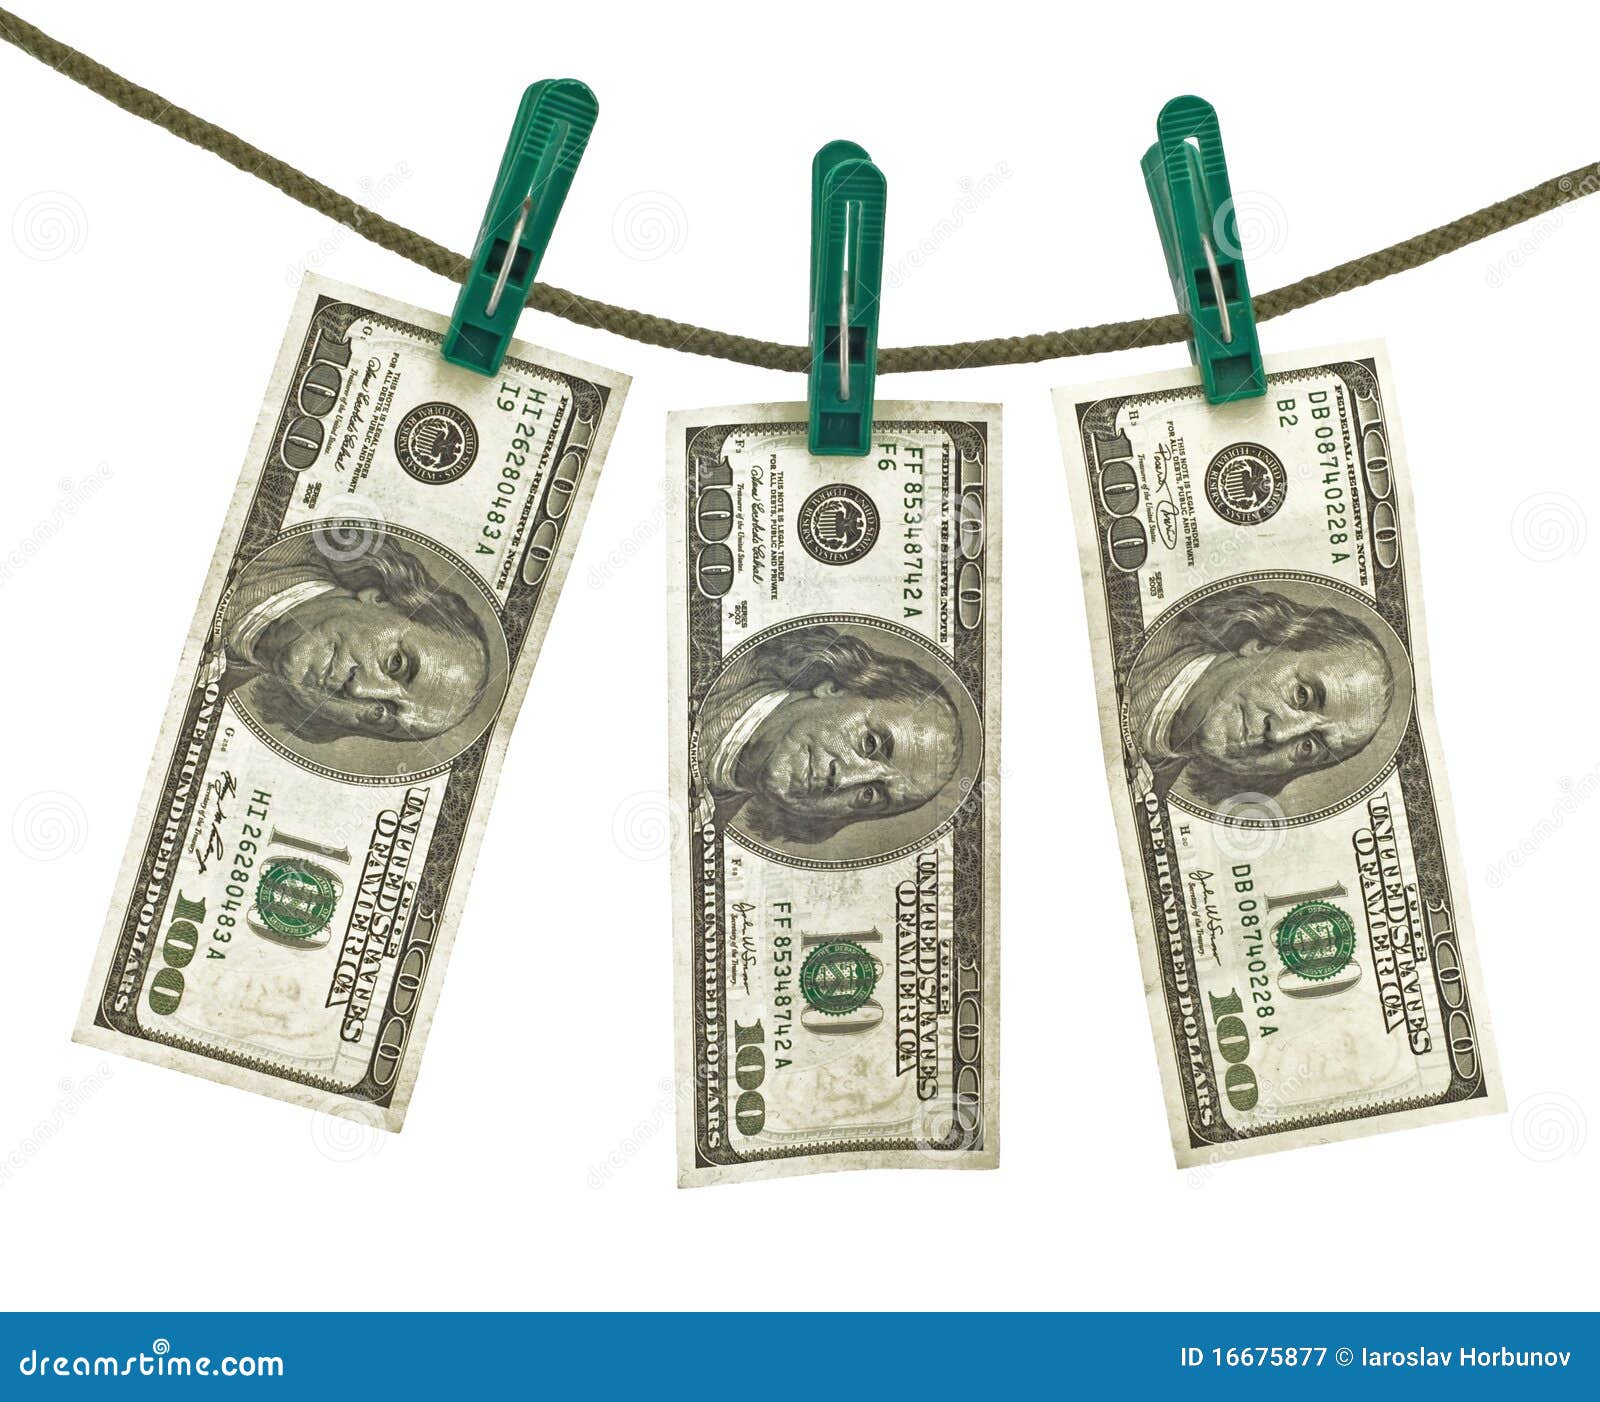 money laundering clip art - photo #50